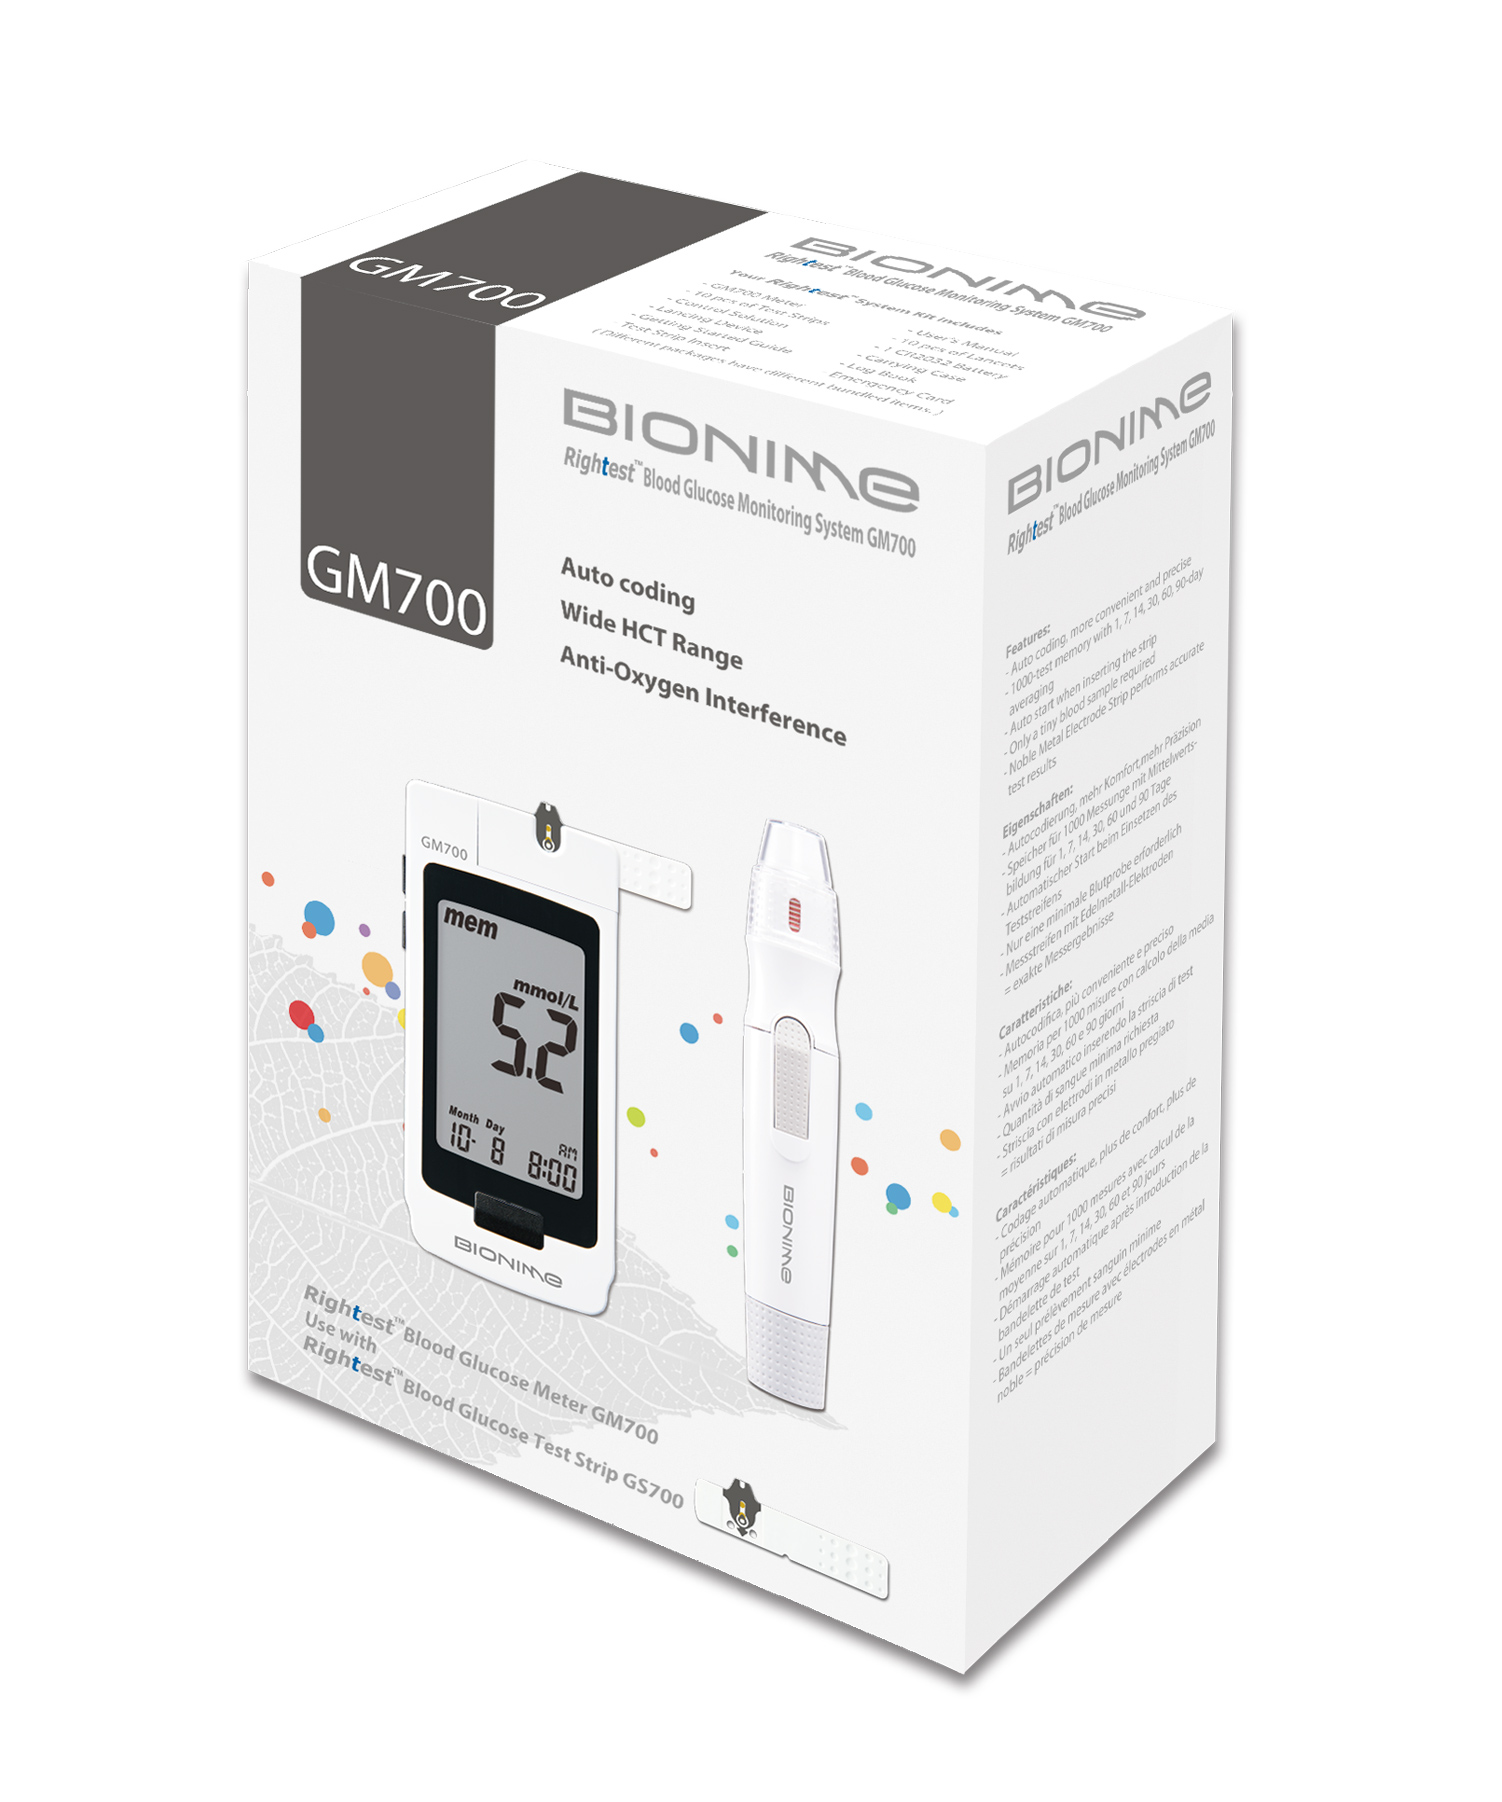 Blood Glucose Monitoring GM 700 Bionime